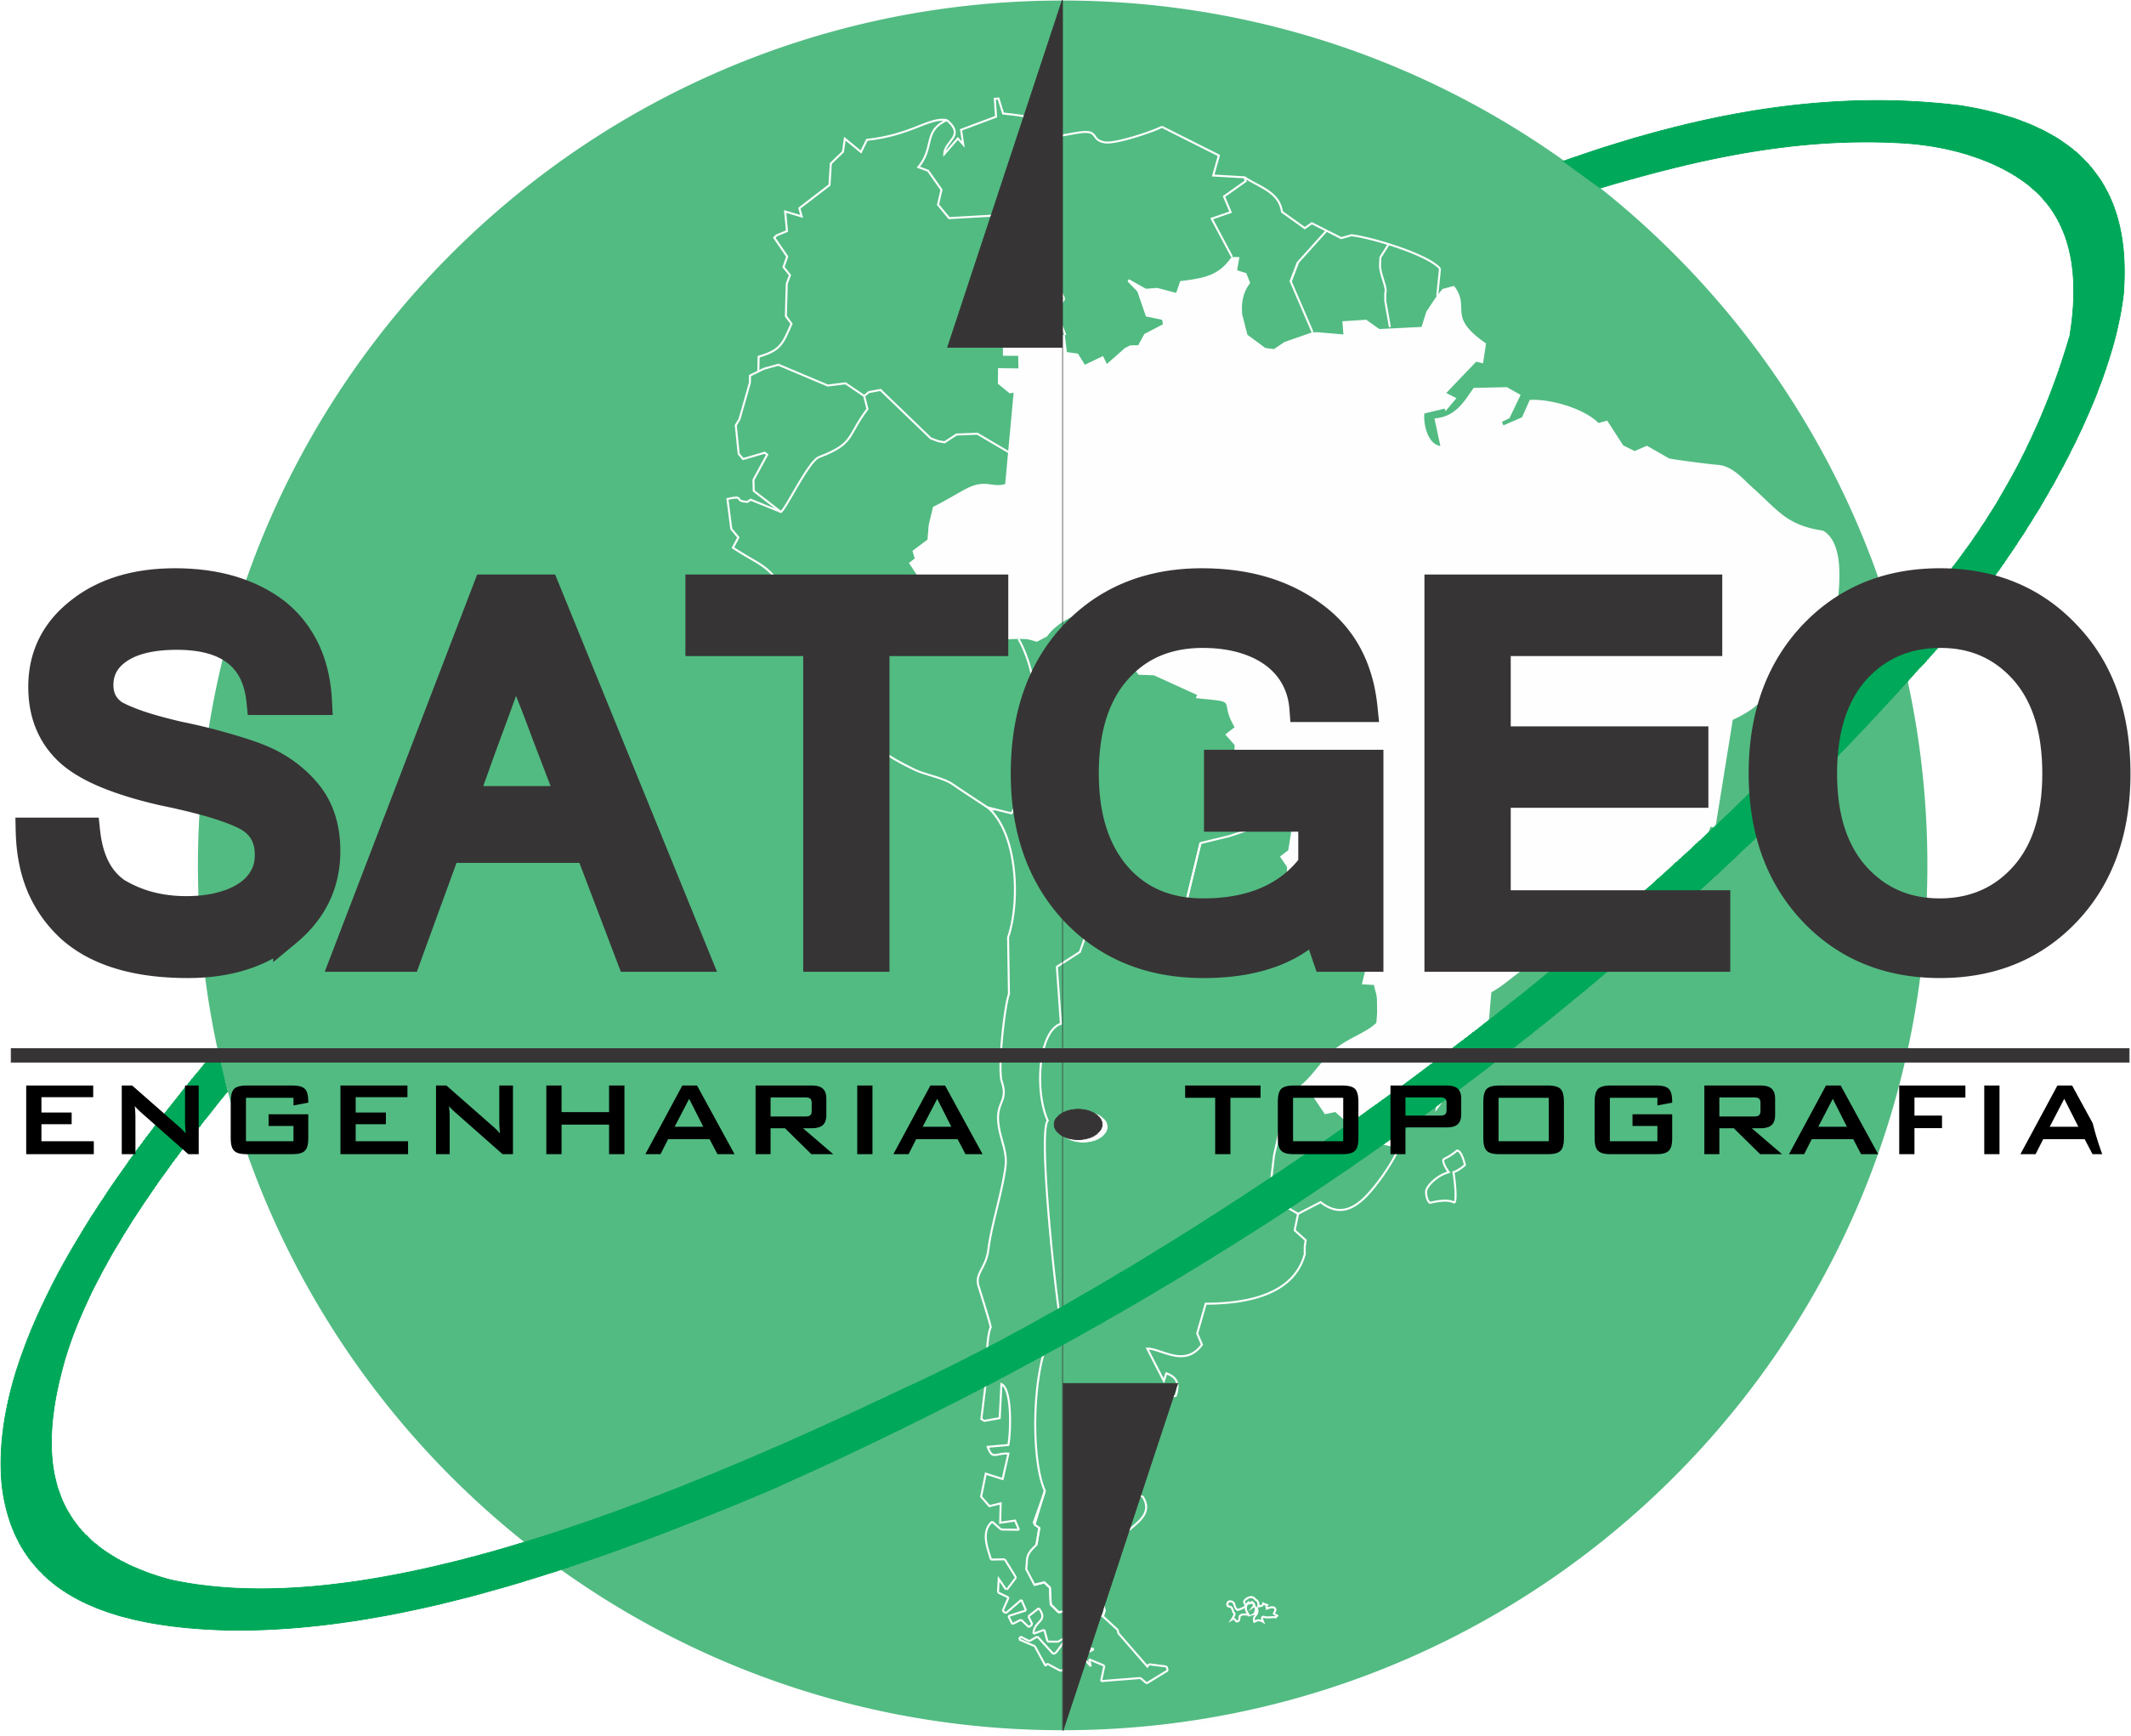 SATGEO - Engenharia e Topografia